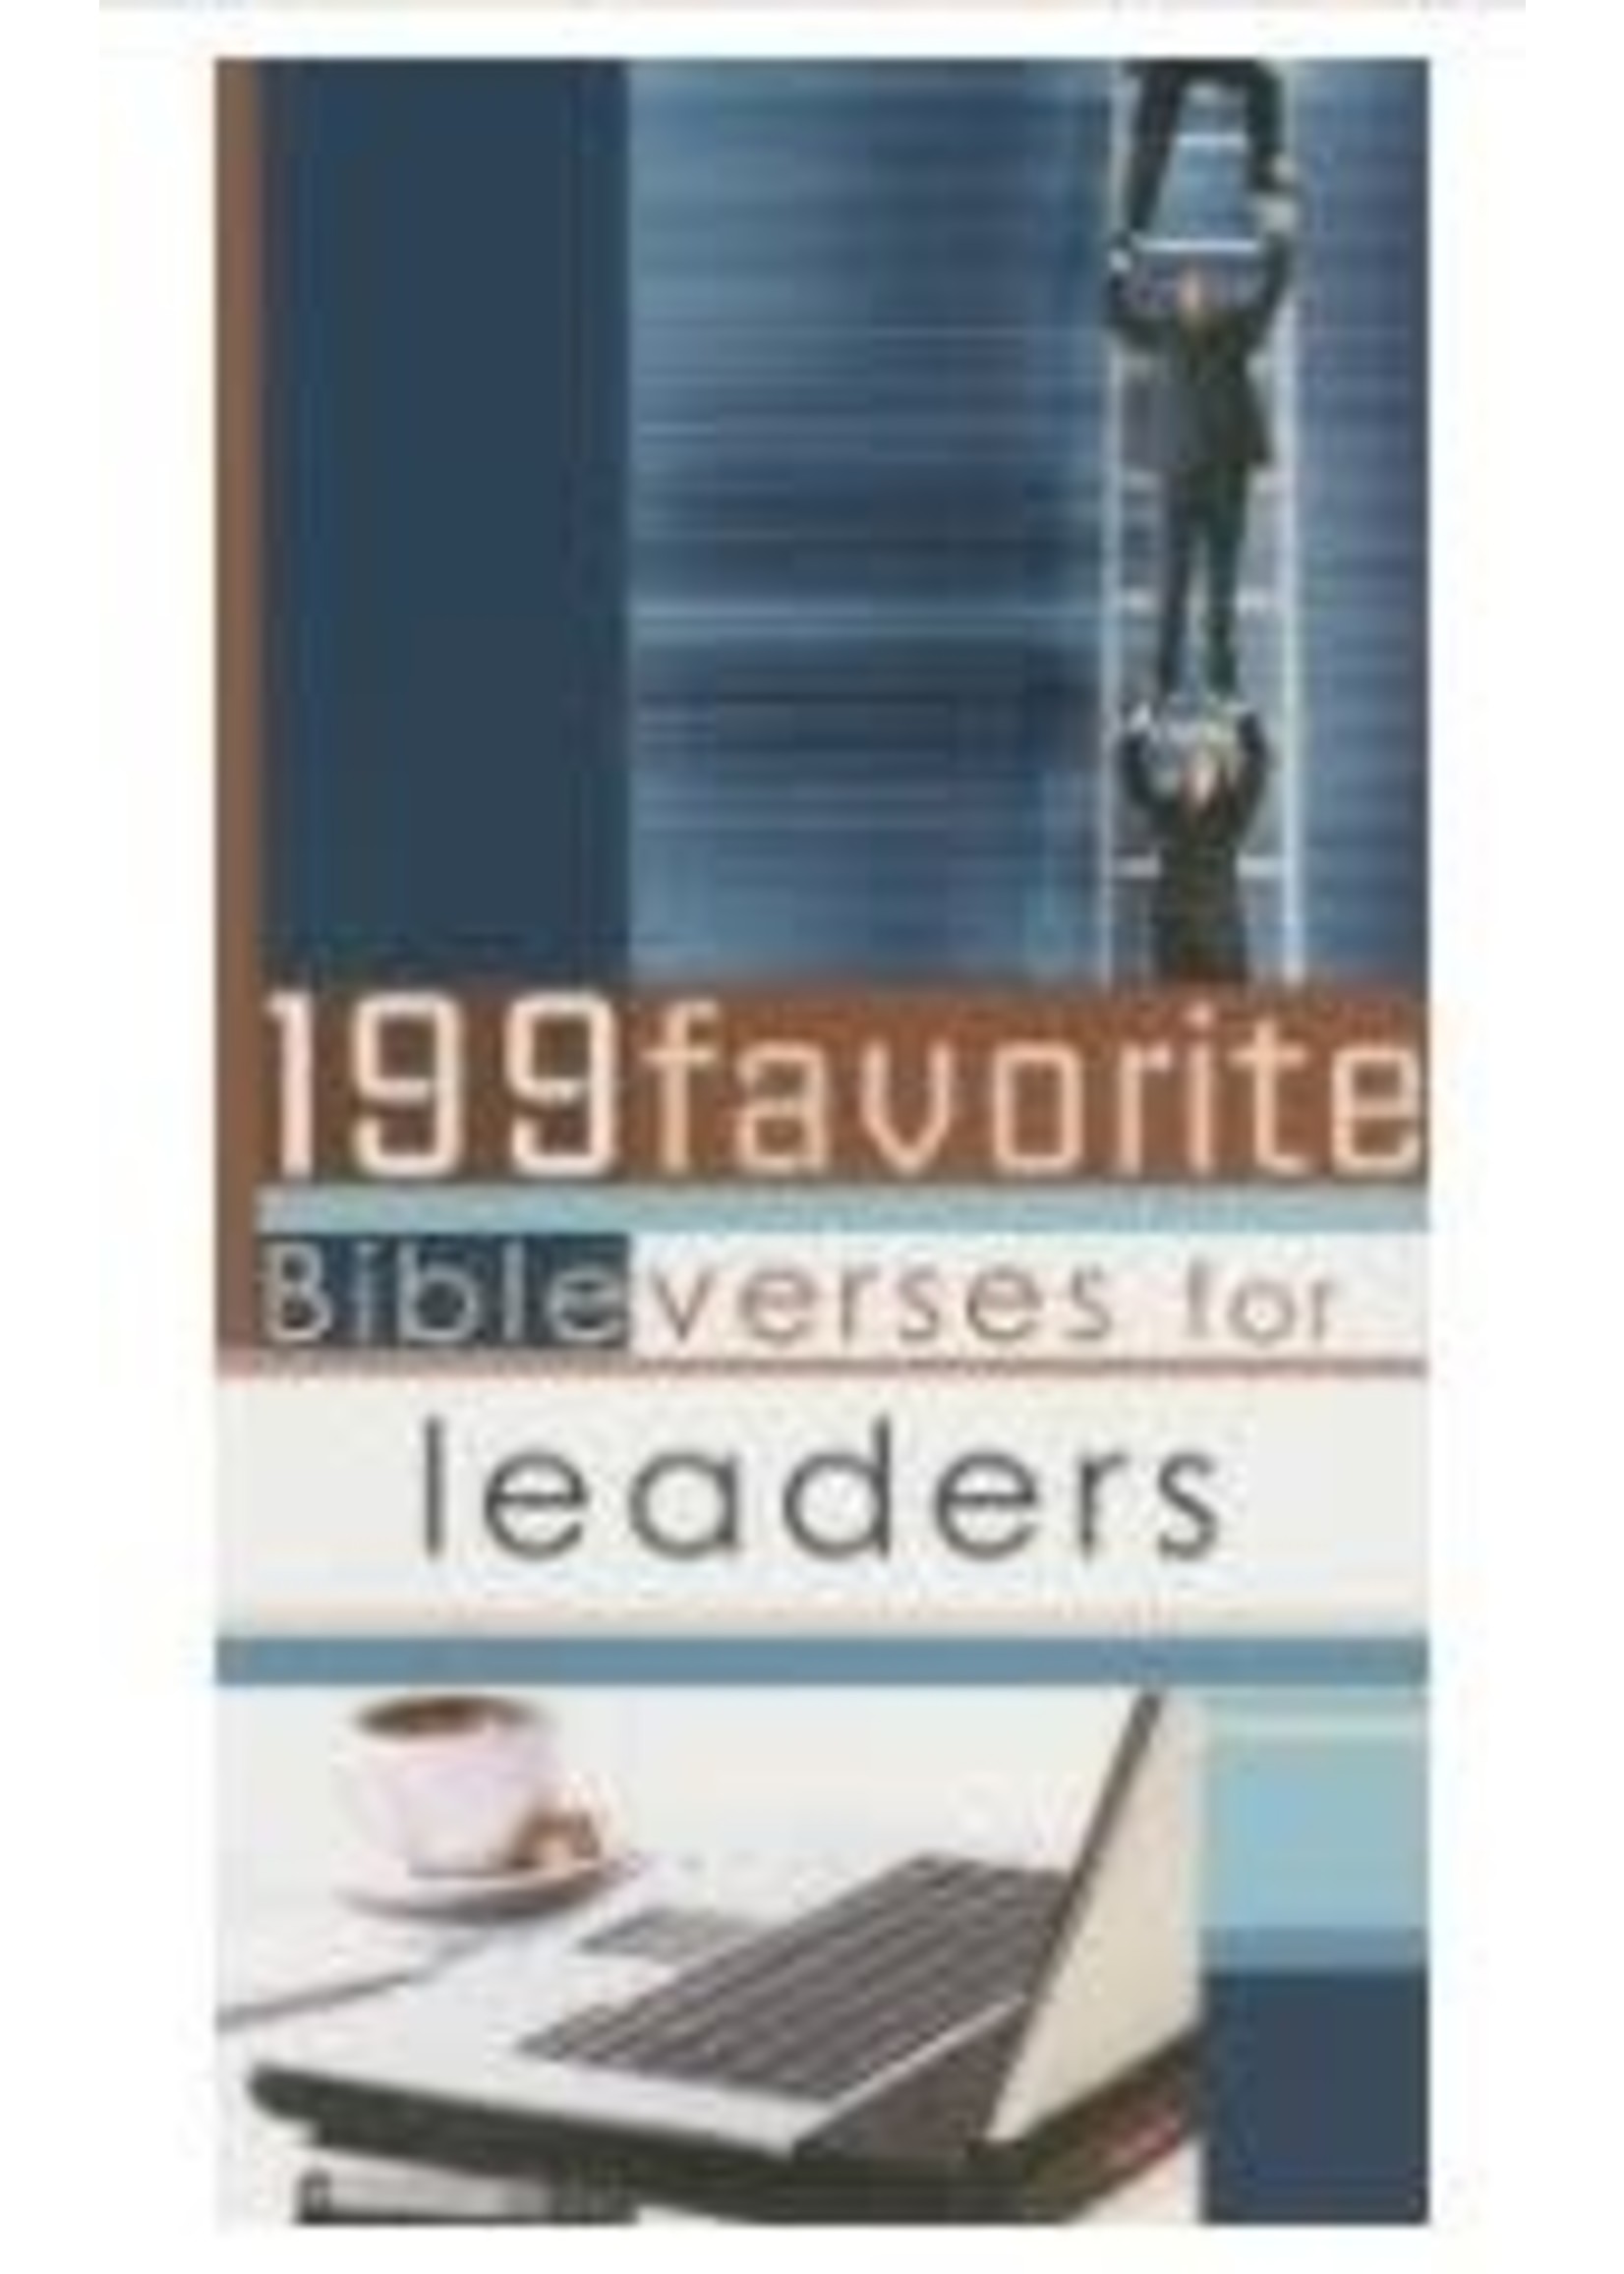 199 Favorite Bible Verses for Leaders